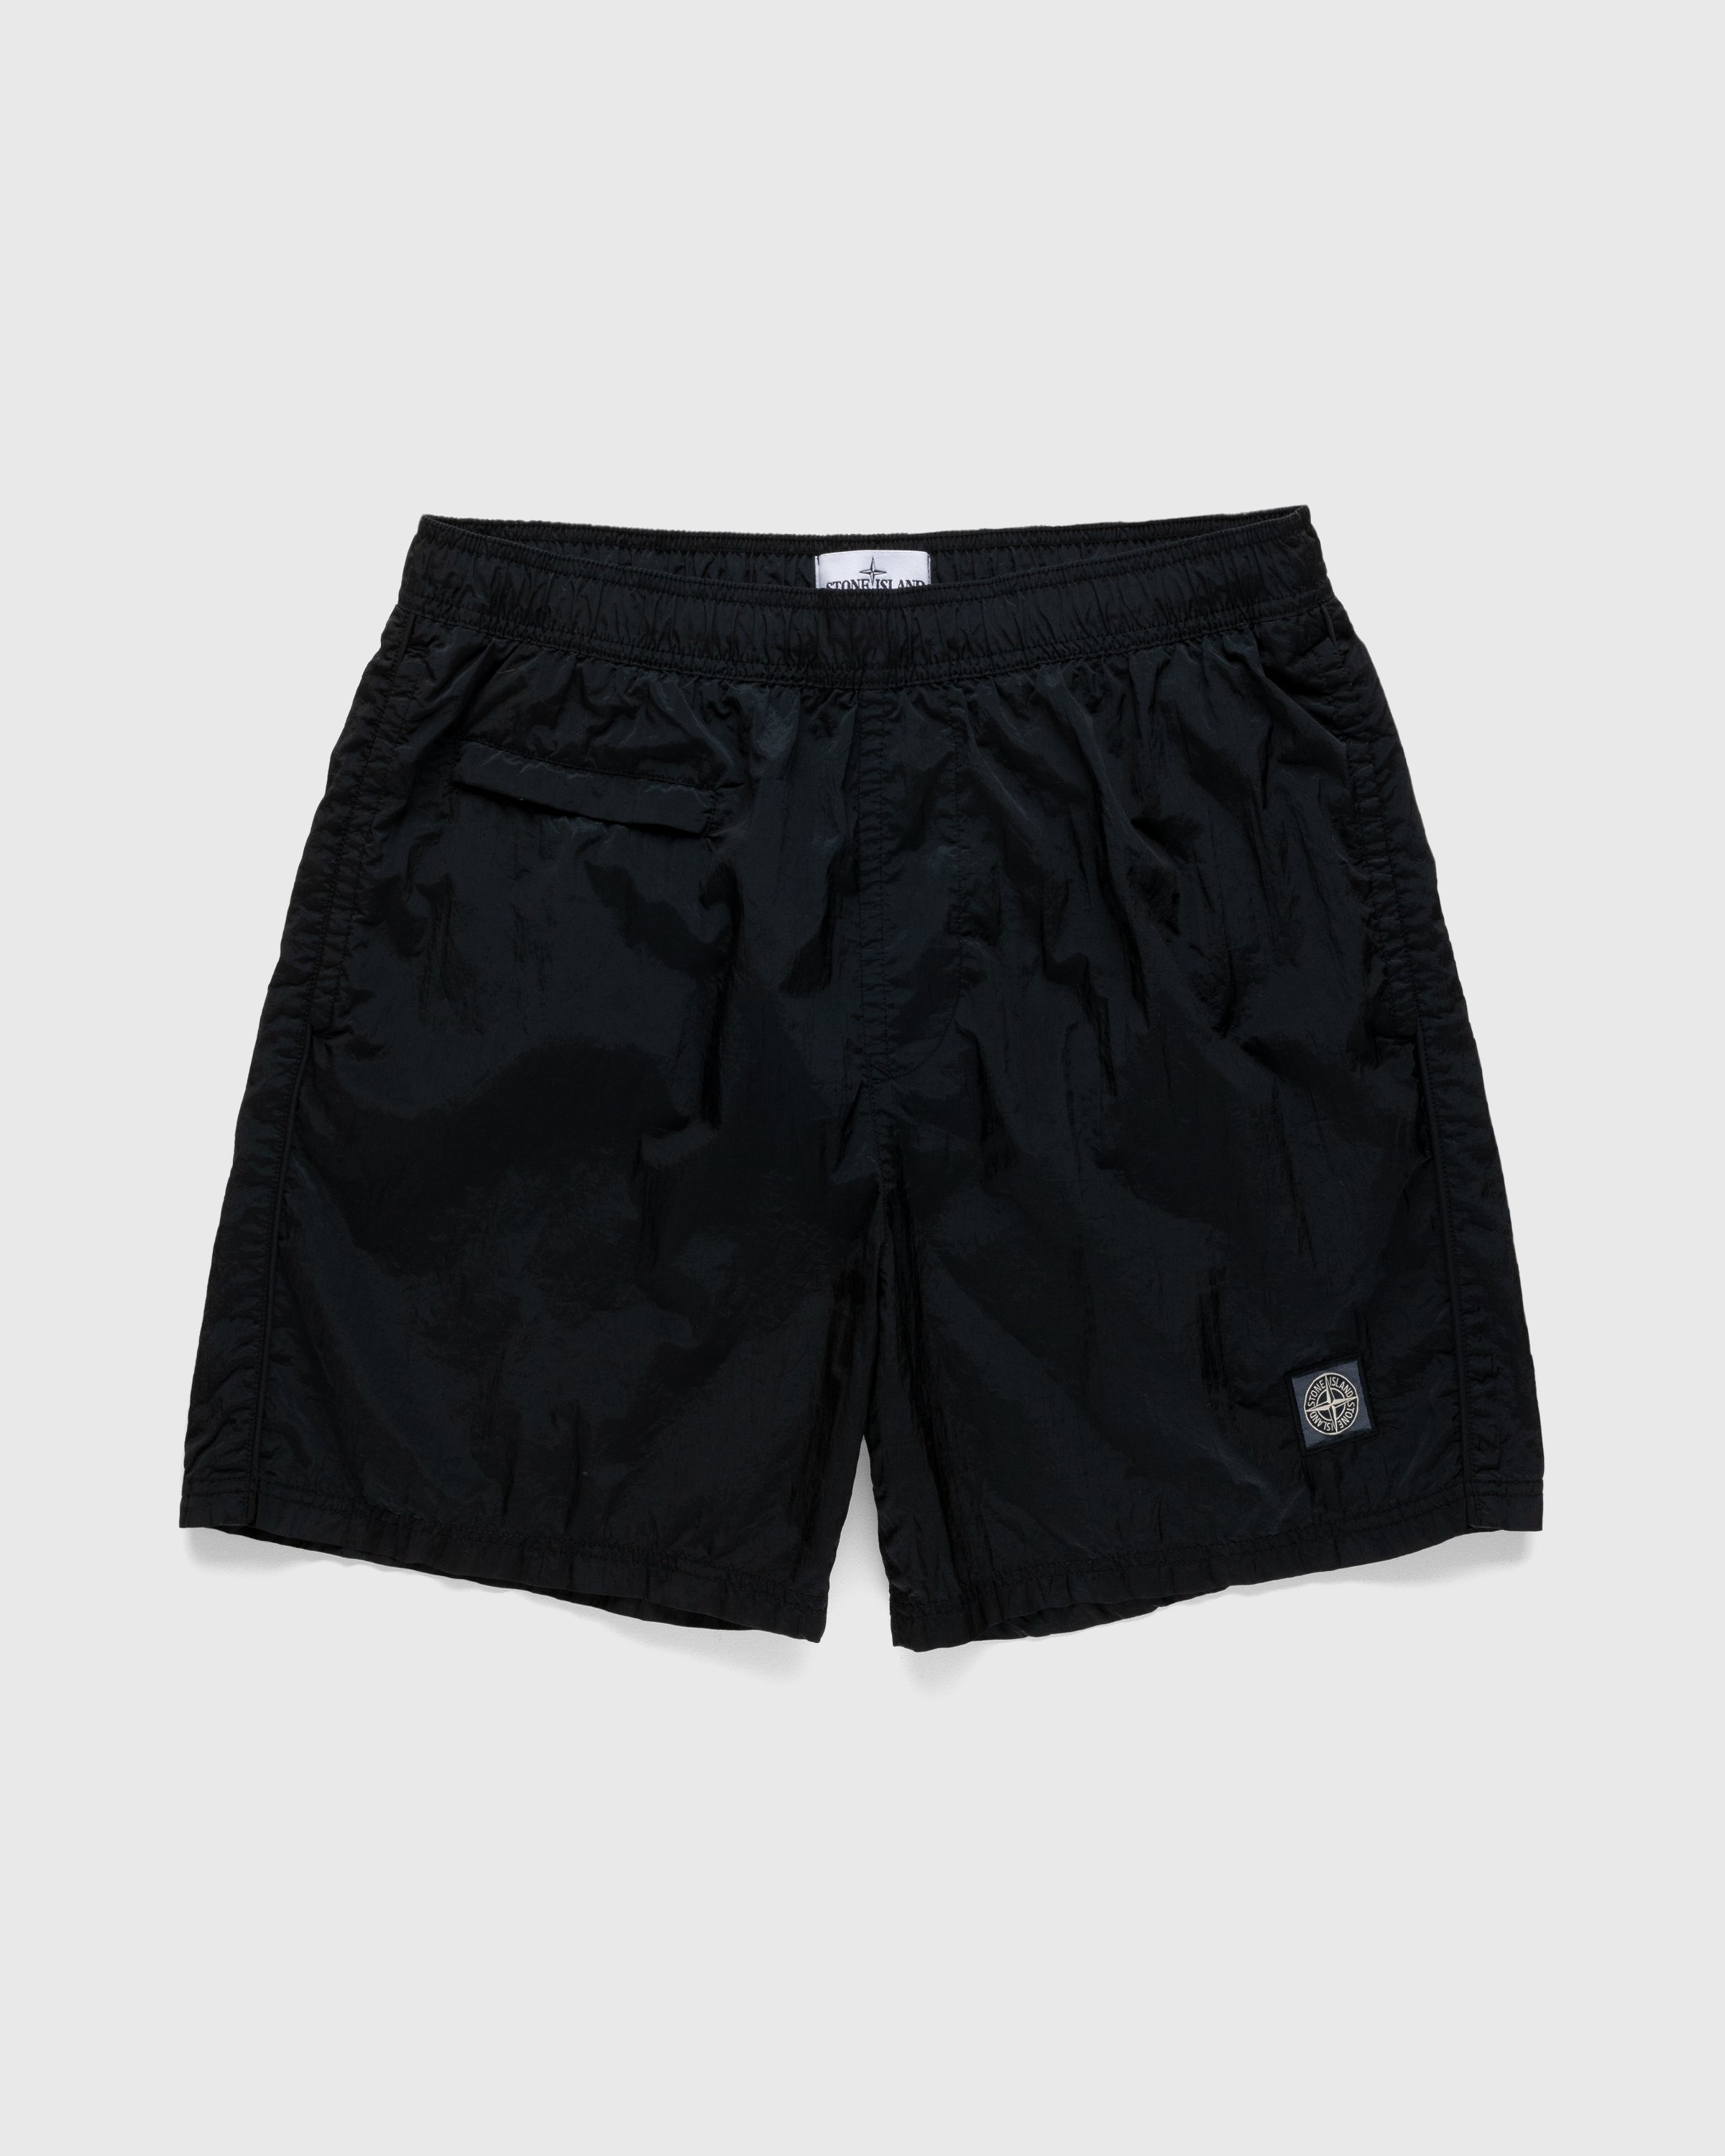 Stone Island - B0243 Nylon Metal Swim Shorts Black - Clothing - Black - Image 1